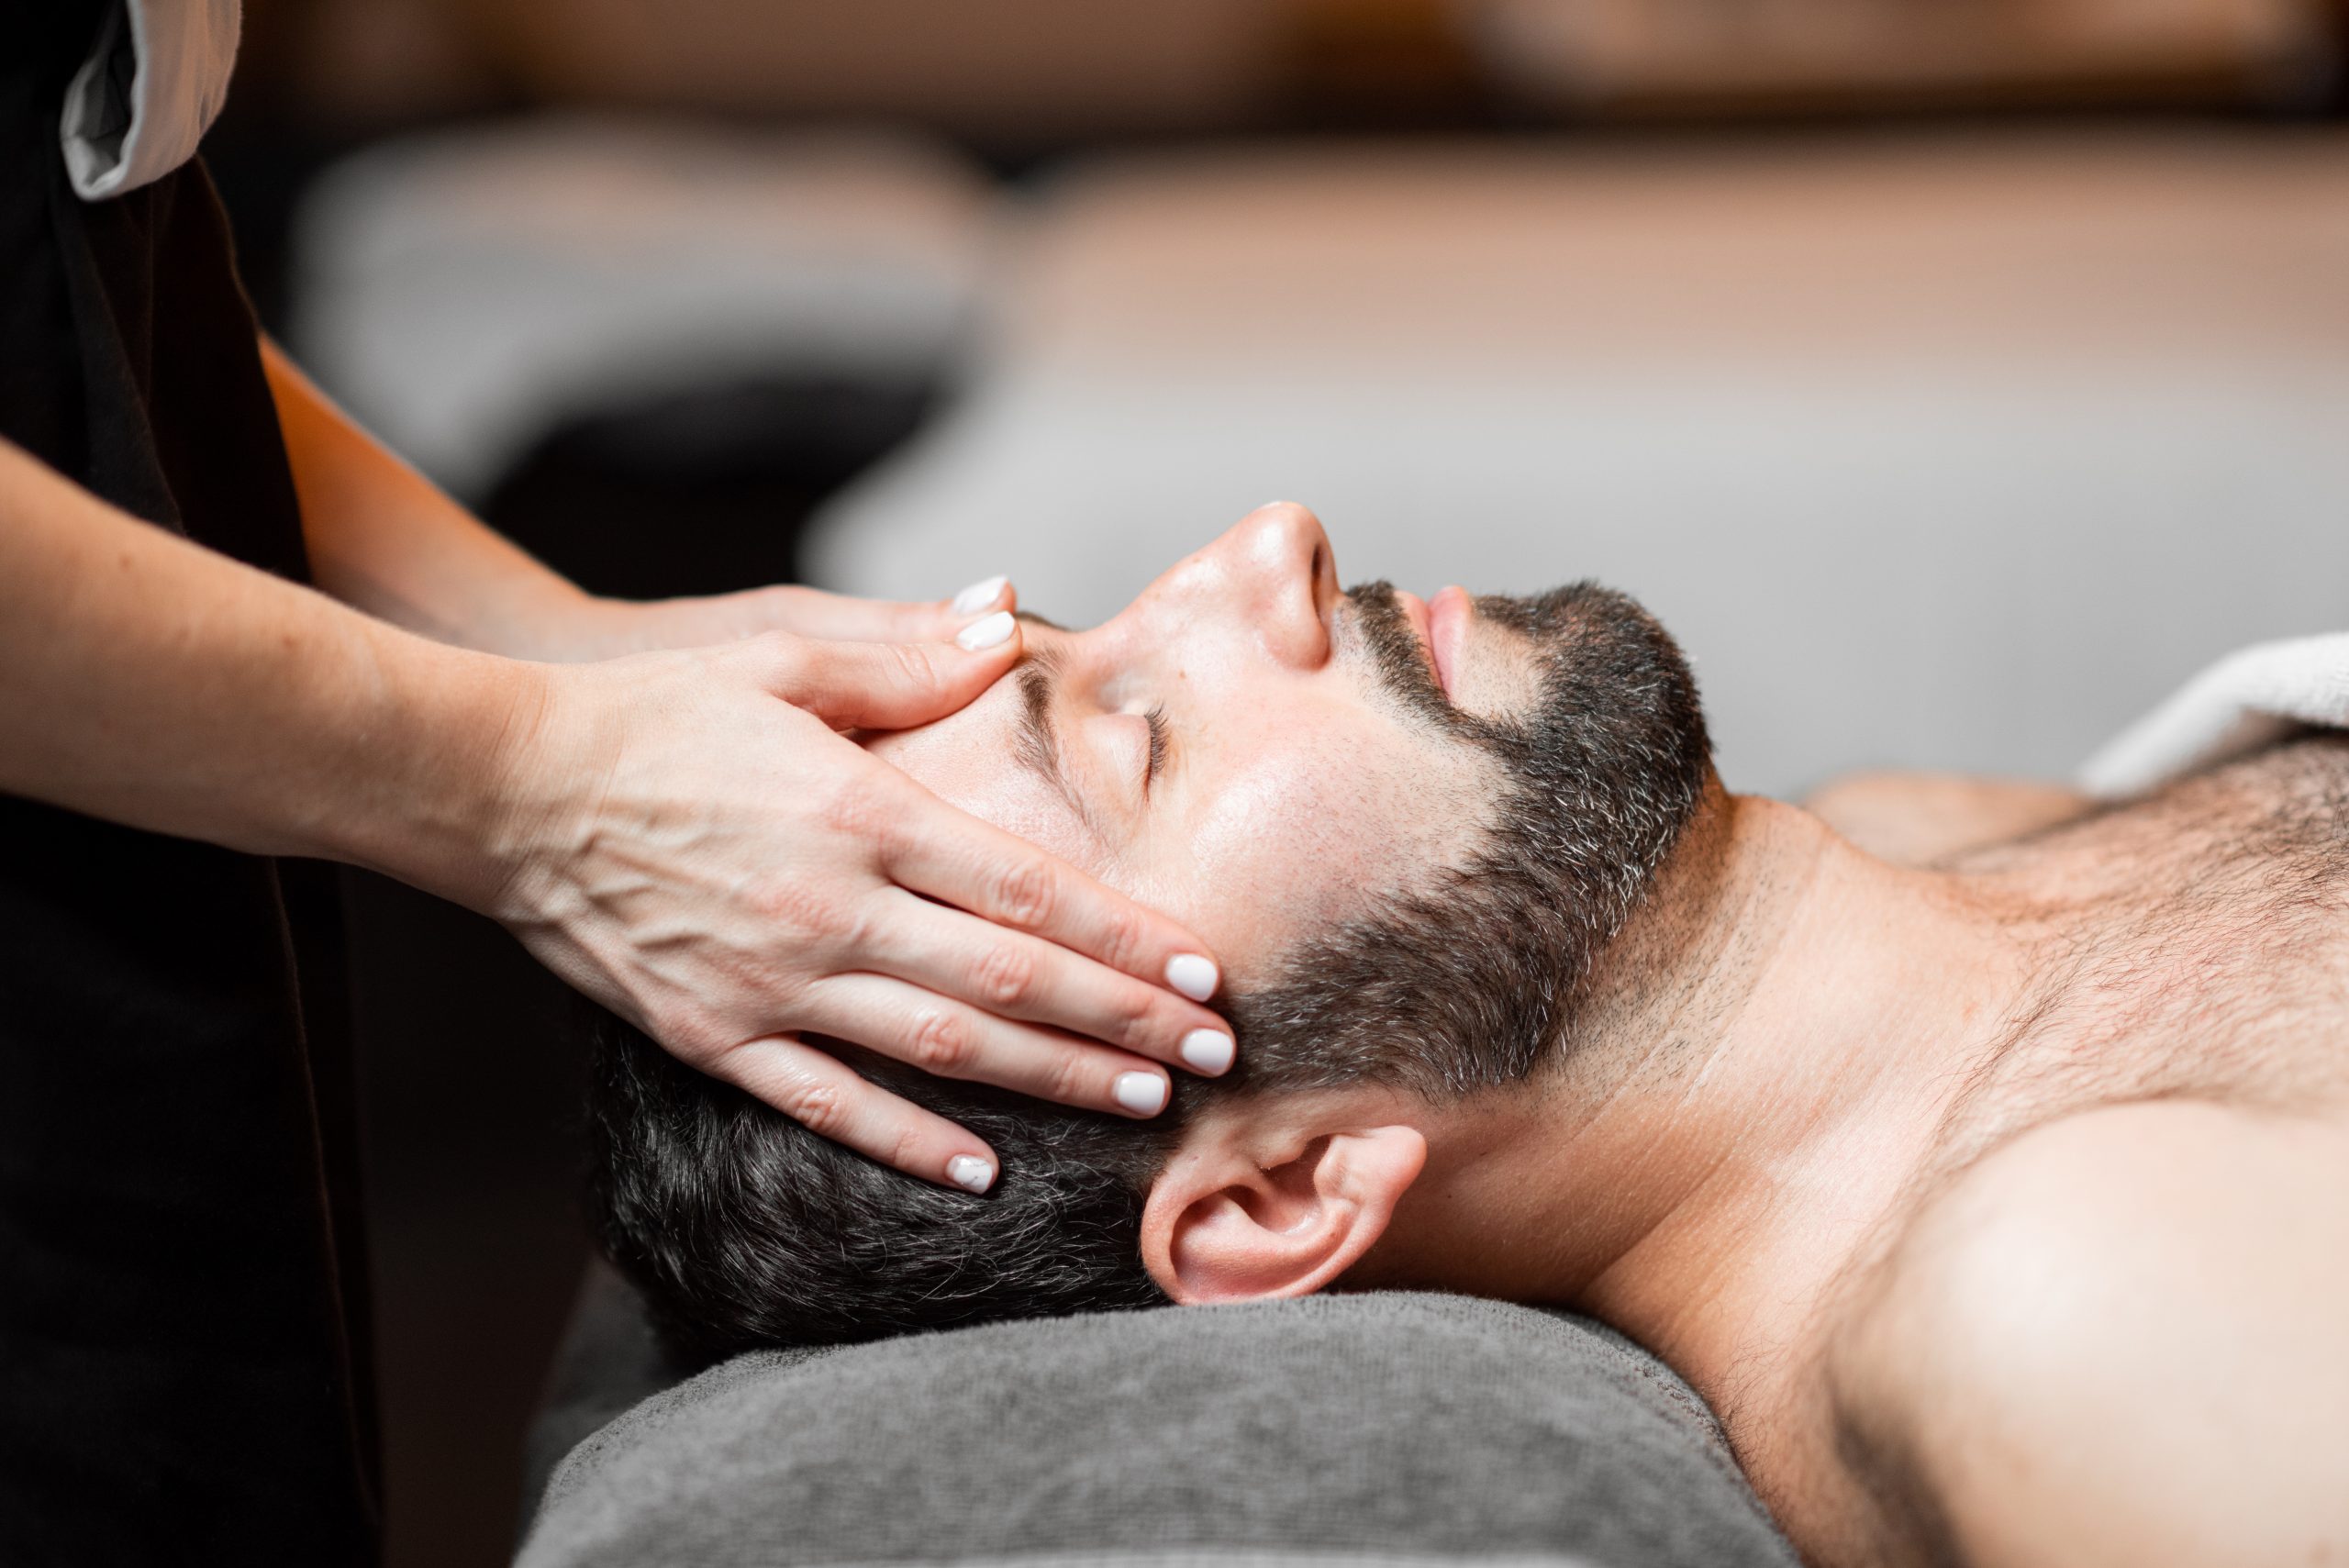 Man receiving facial massage at Spa salon